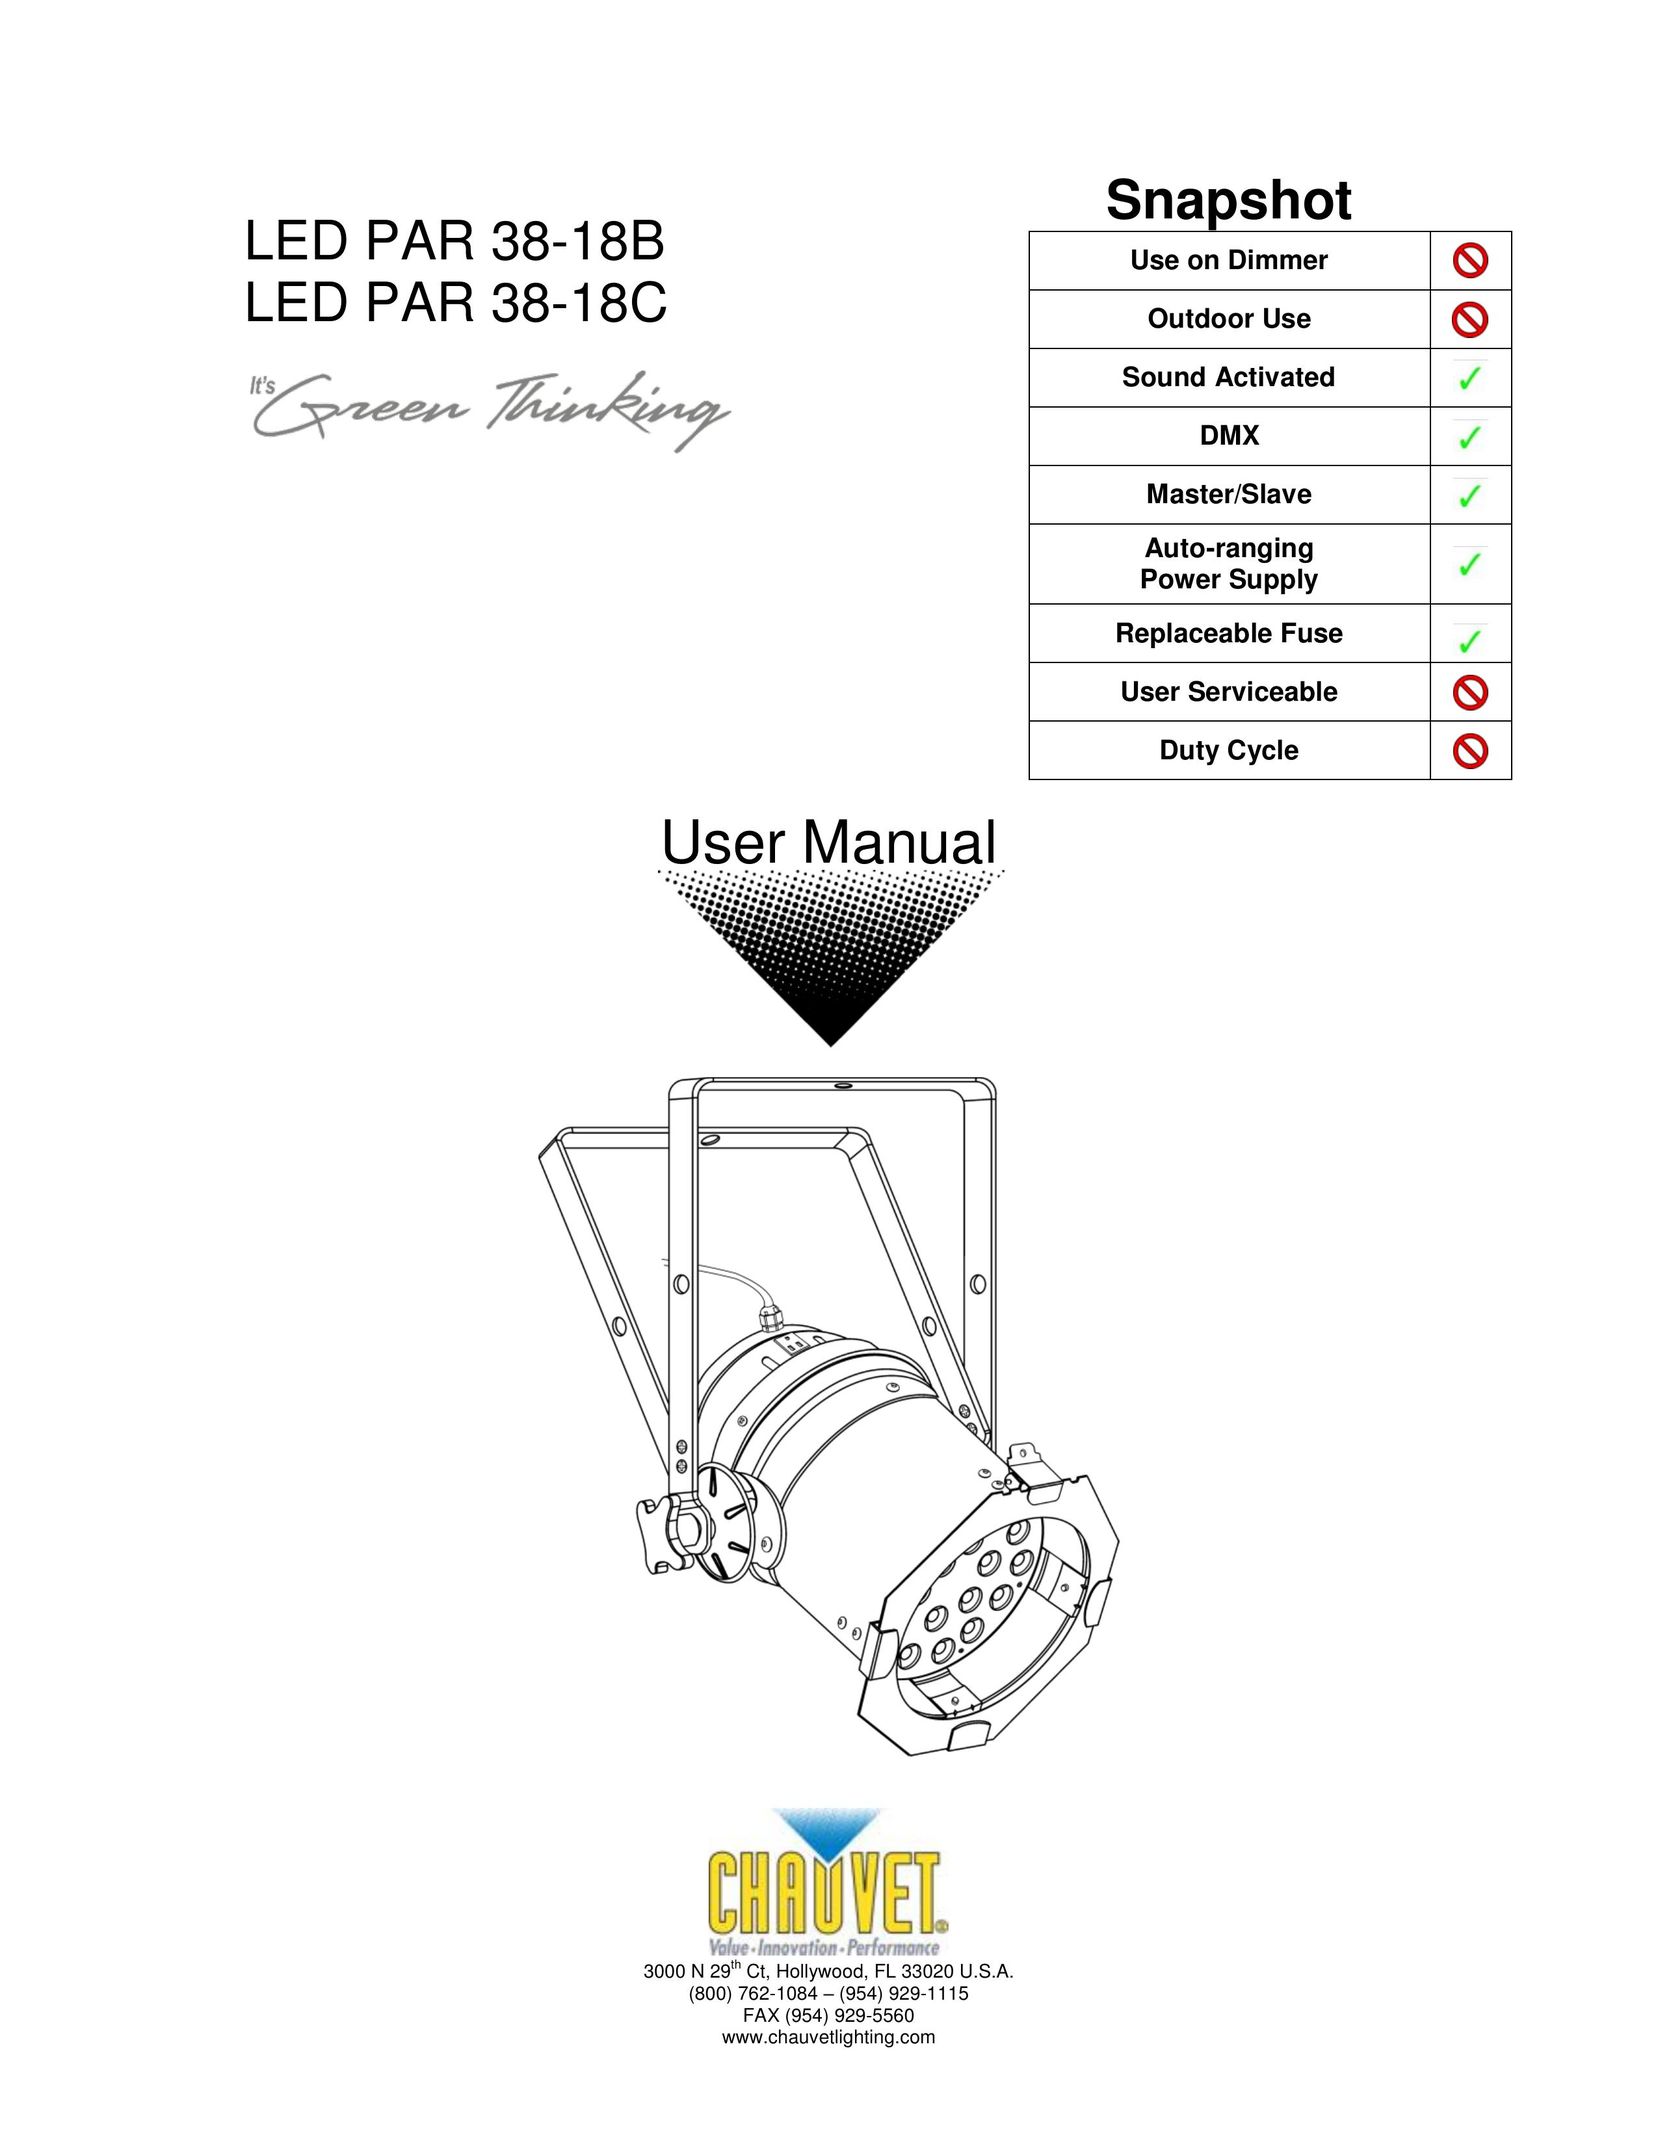 Chauvet LED PAR 38-18C Work Light User Manual